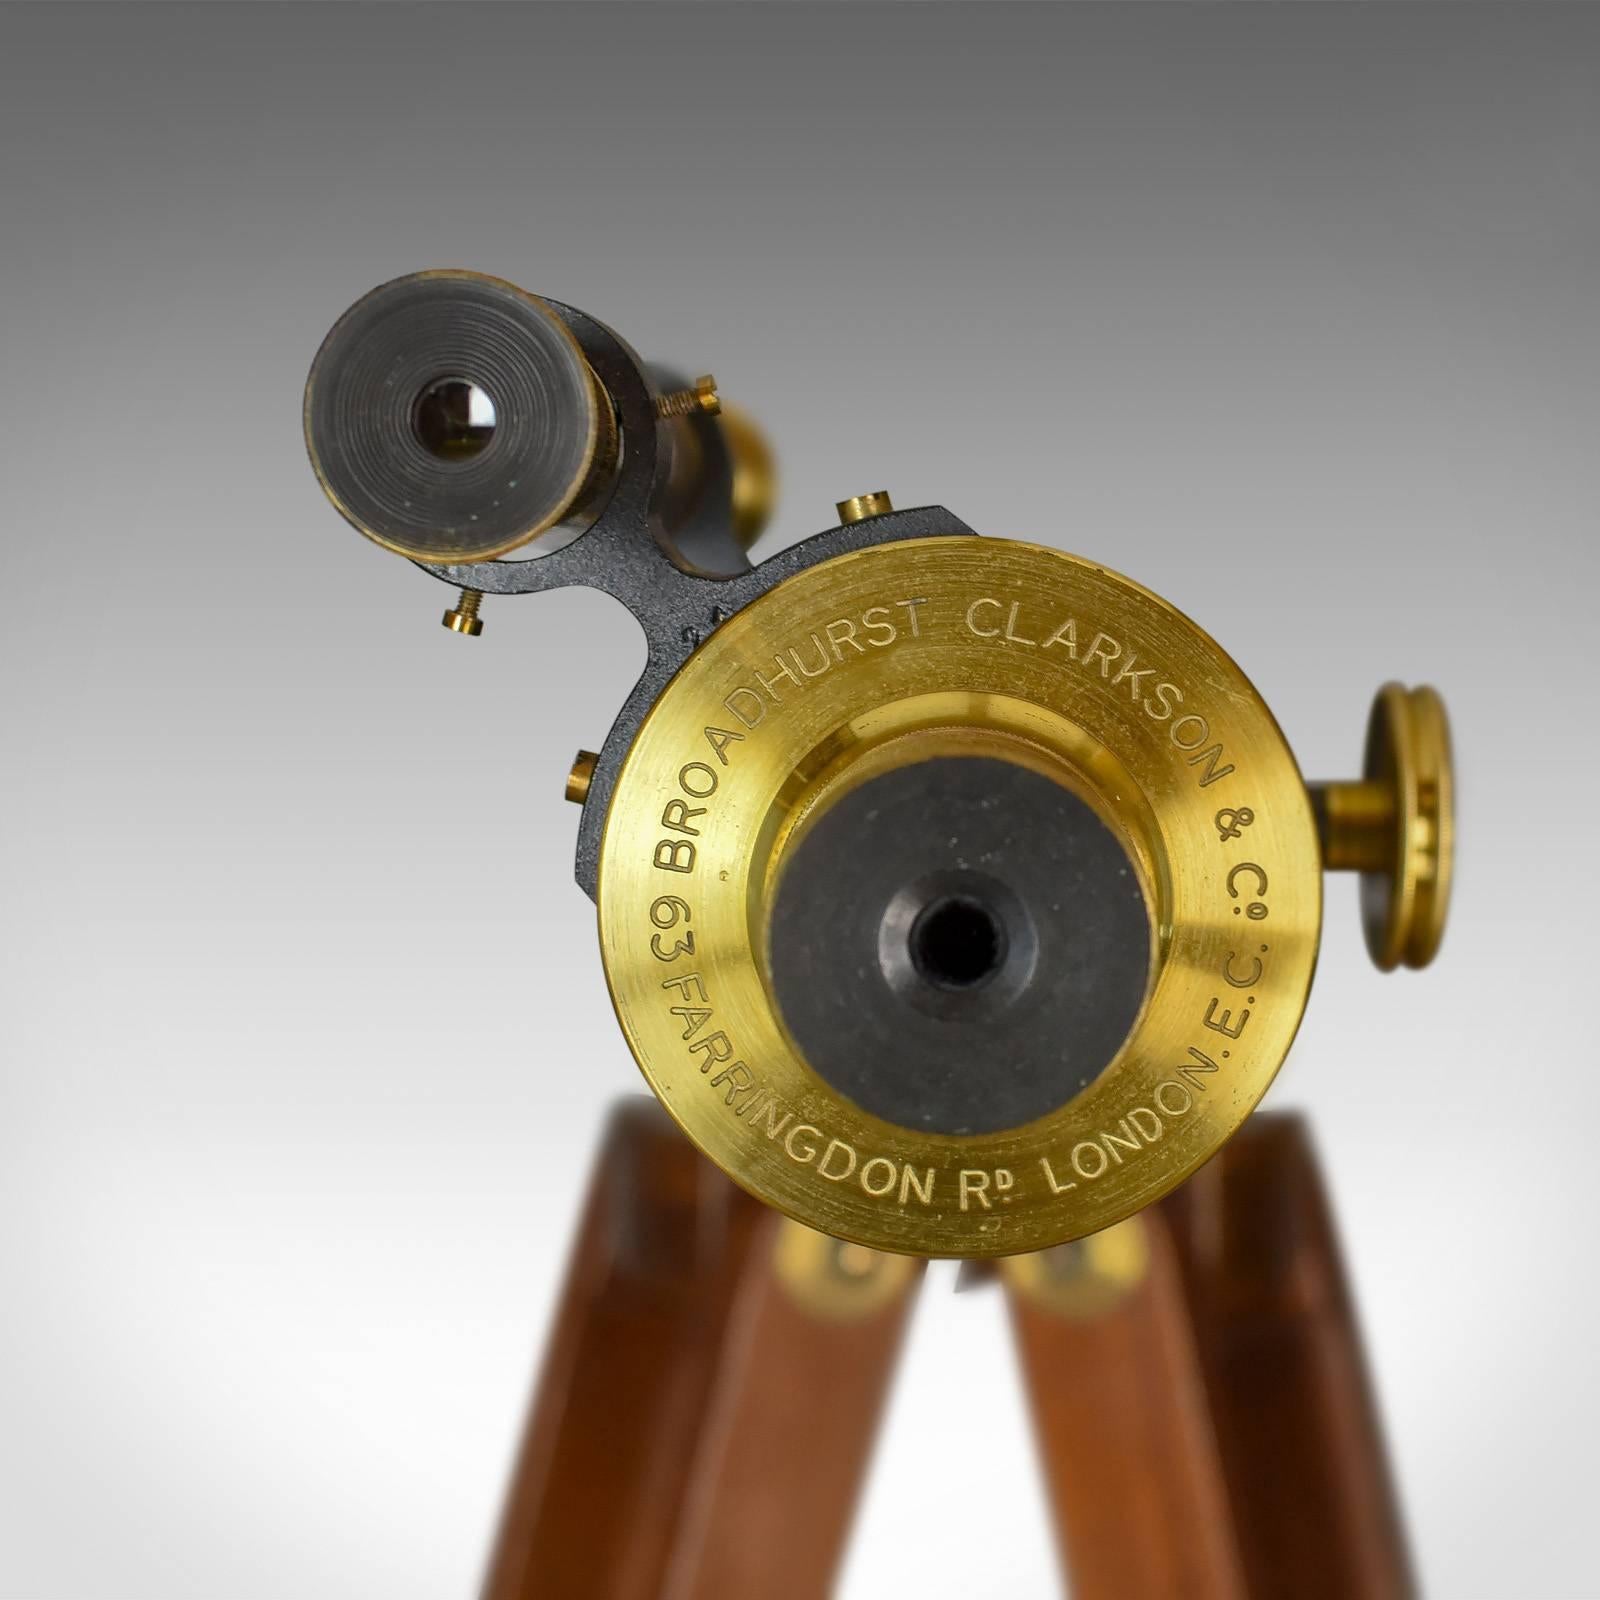 20th Century Antique Telescope on Tripod, Original Case, Refractor, circa 1920-40